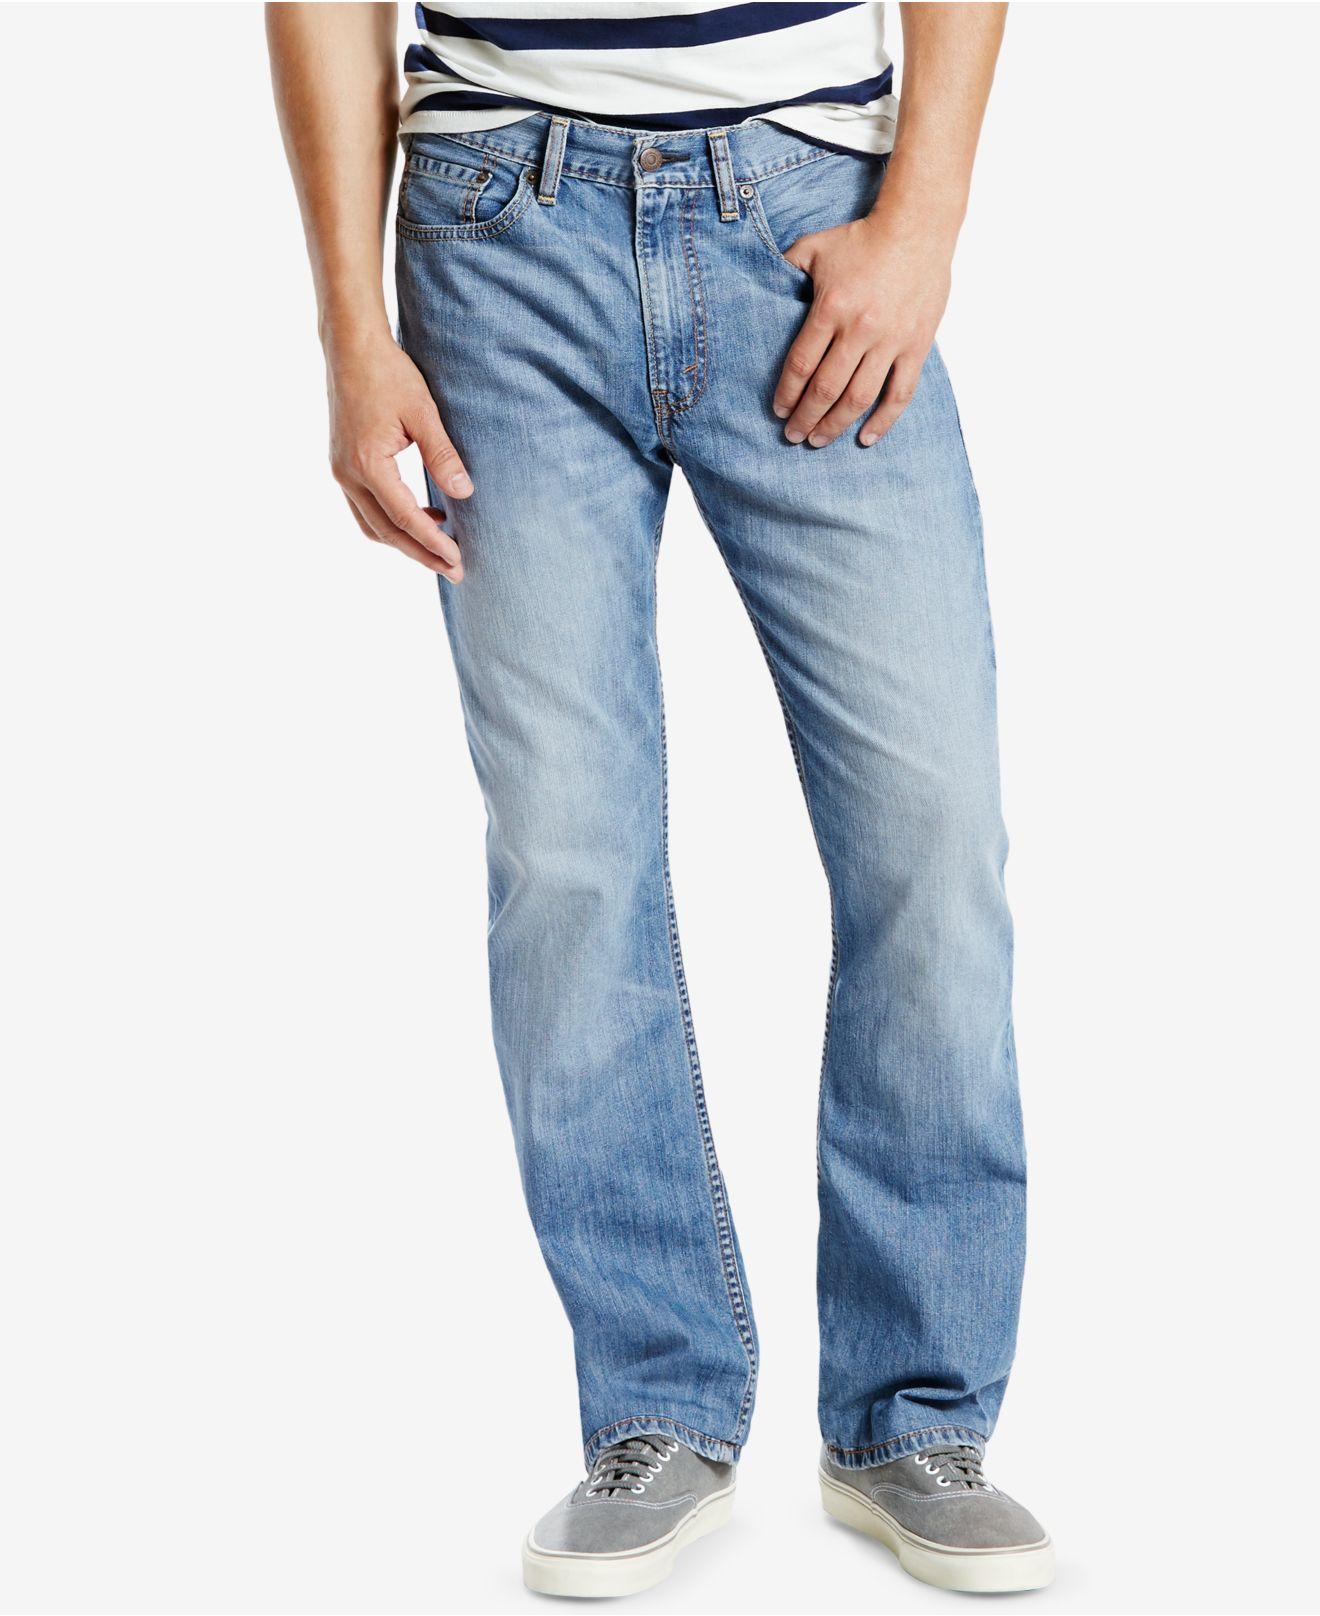 Levi's Denim 505 Regular-fit Non-stretch Jeans in Blue for Men - Lyst